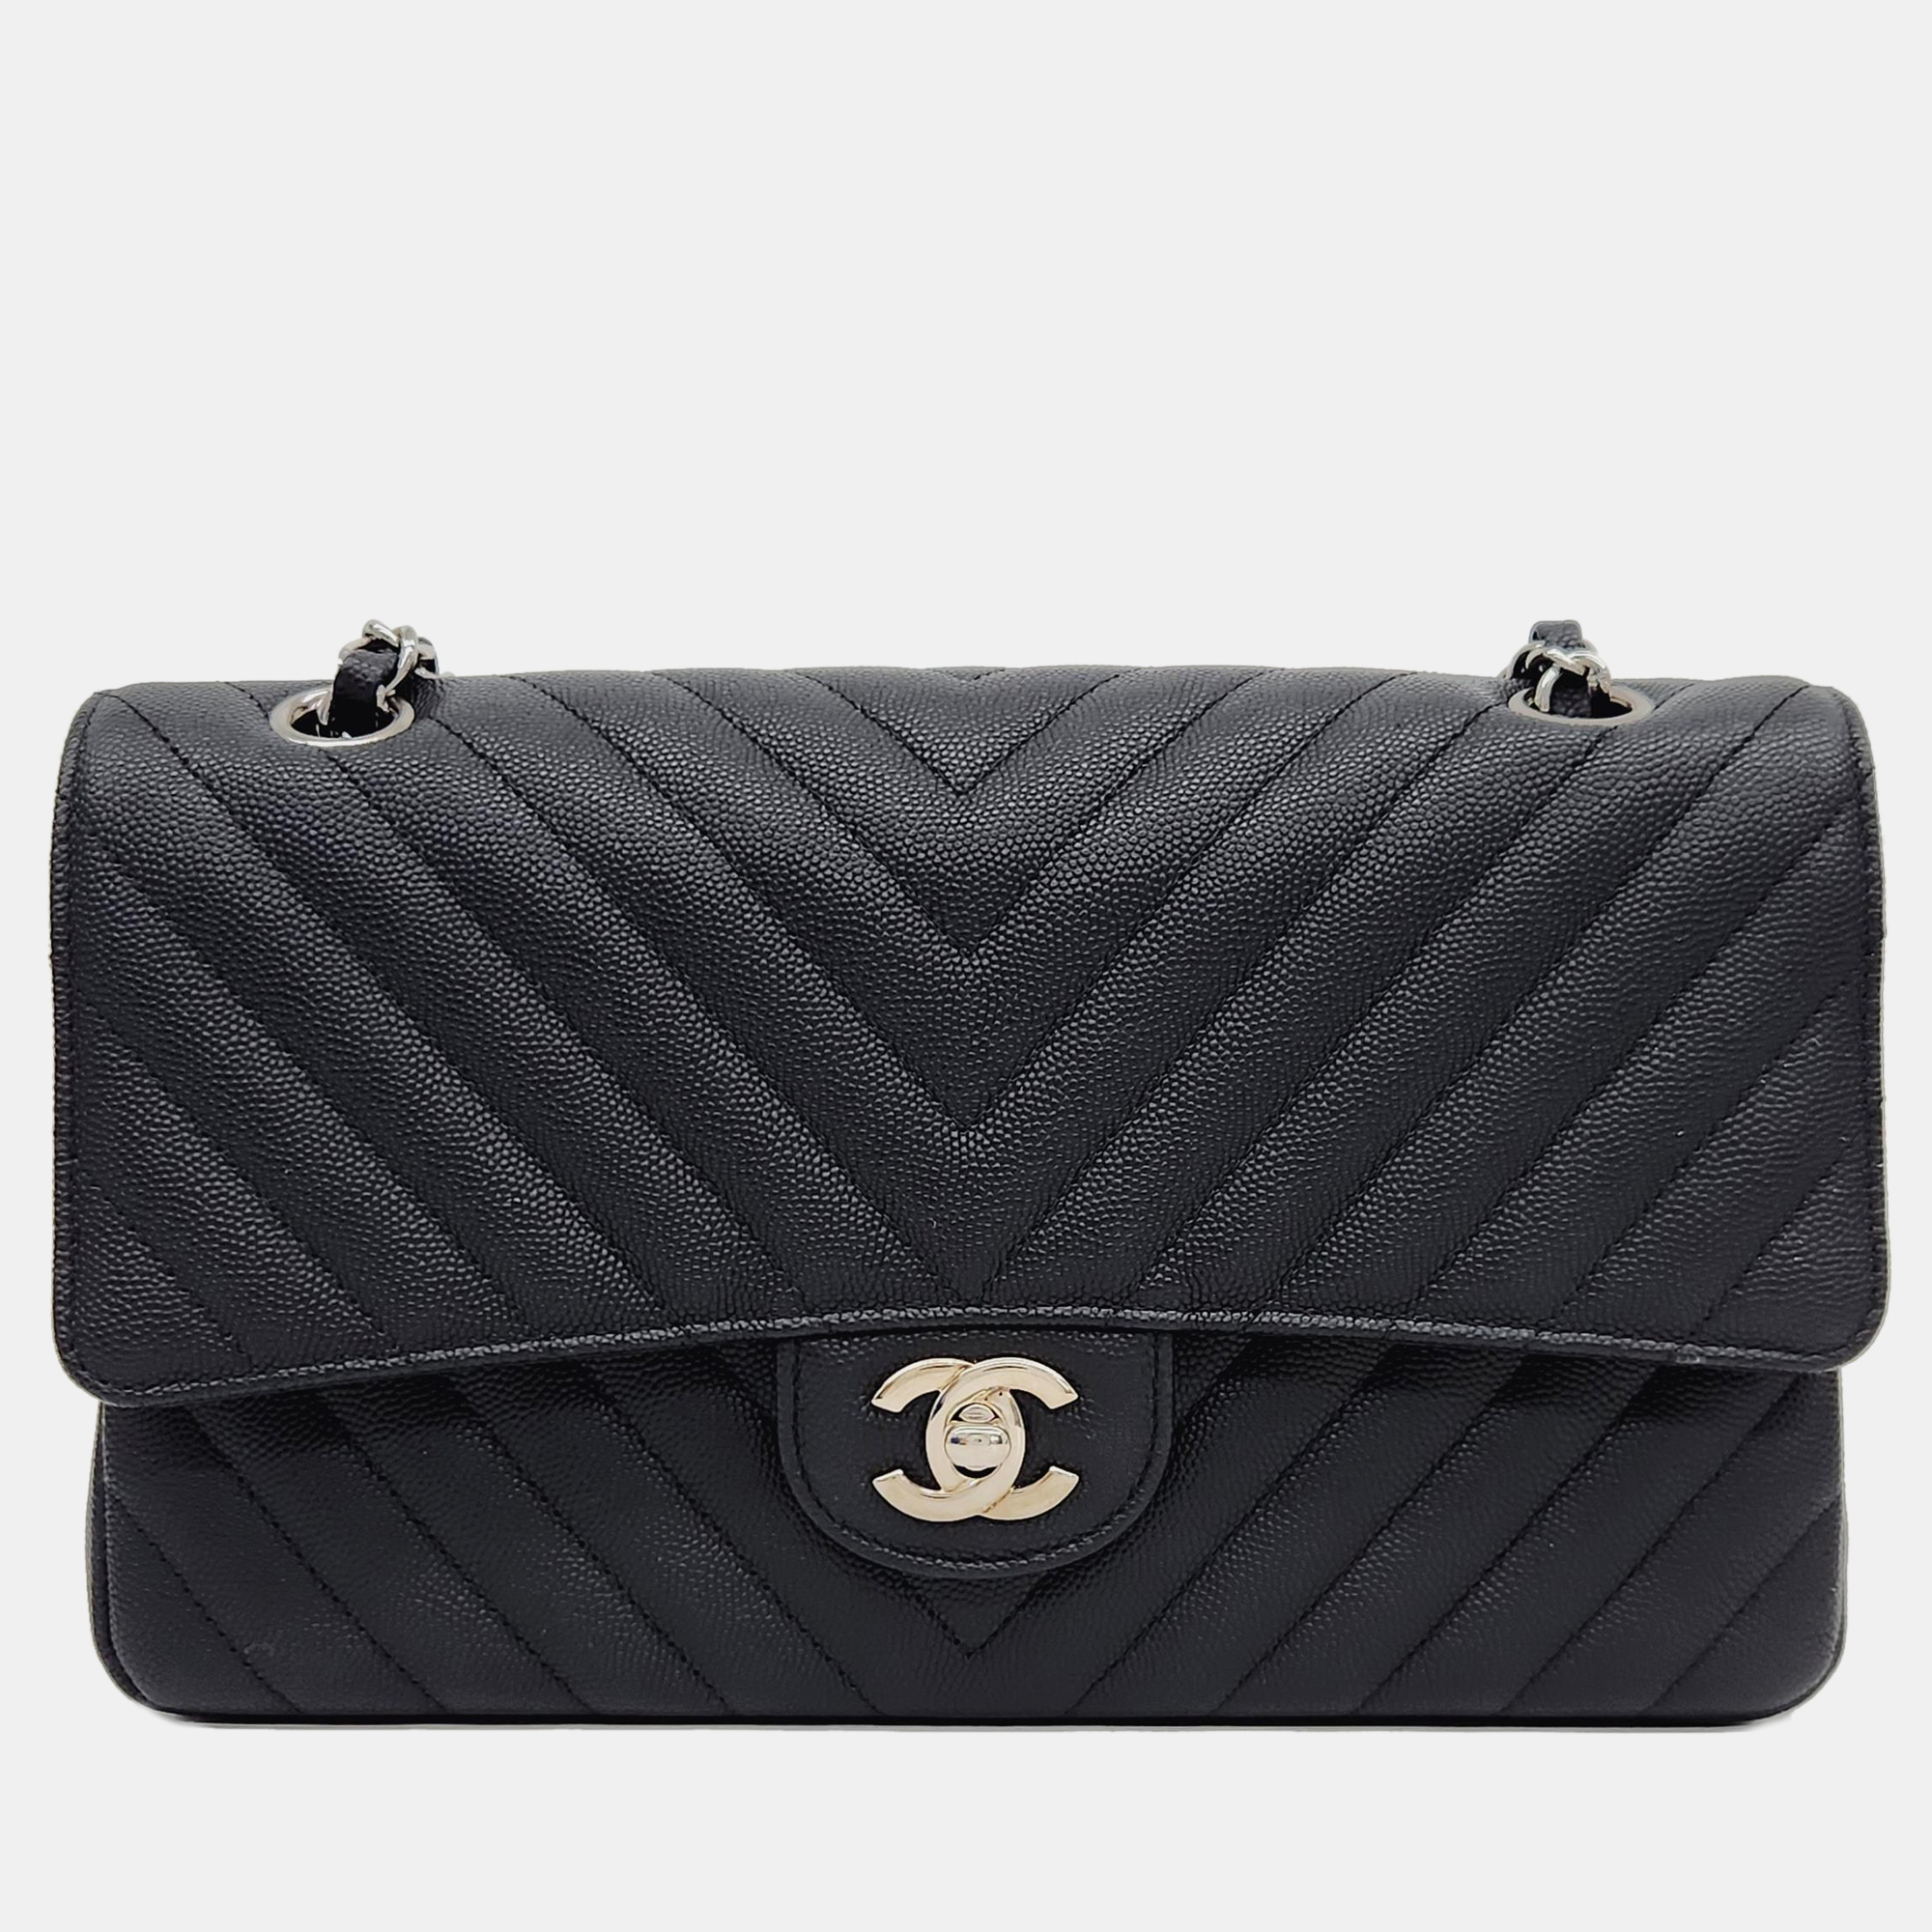 Chanel caviar chevron classic medium handbag